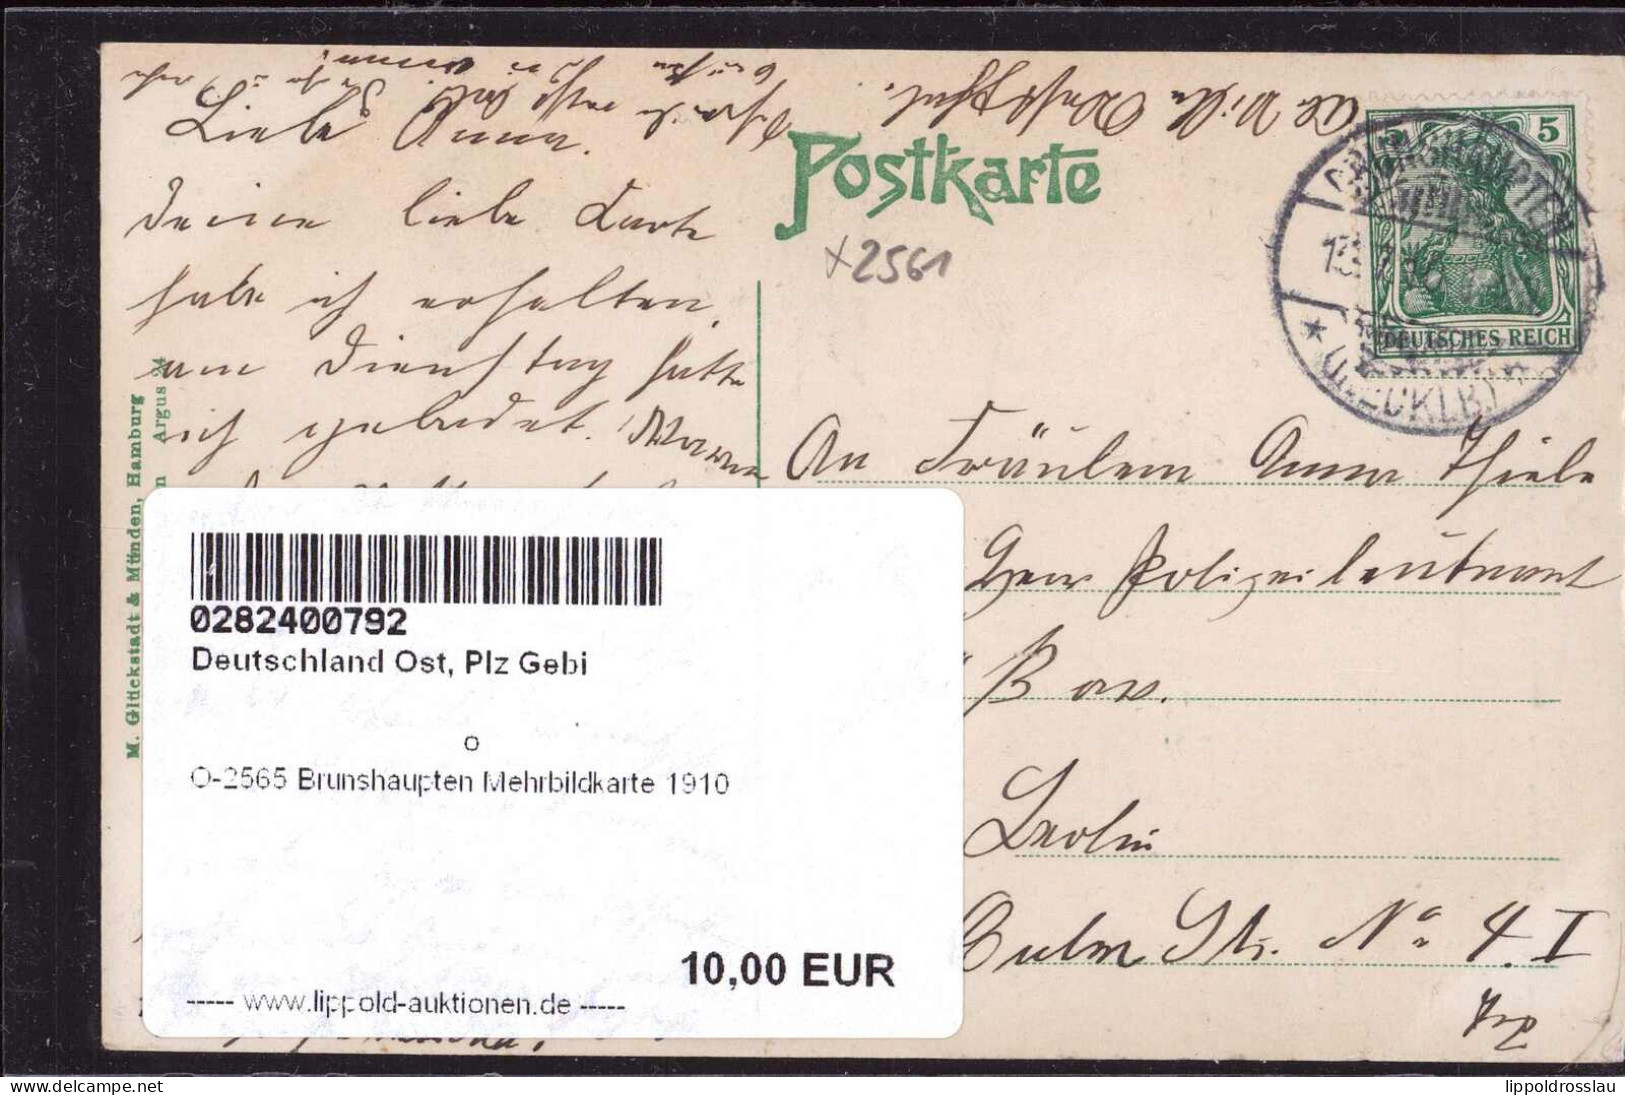 Gest. O-2565 Brunshaupten Mehrbildkarte 1910 - Bad Doberan